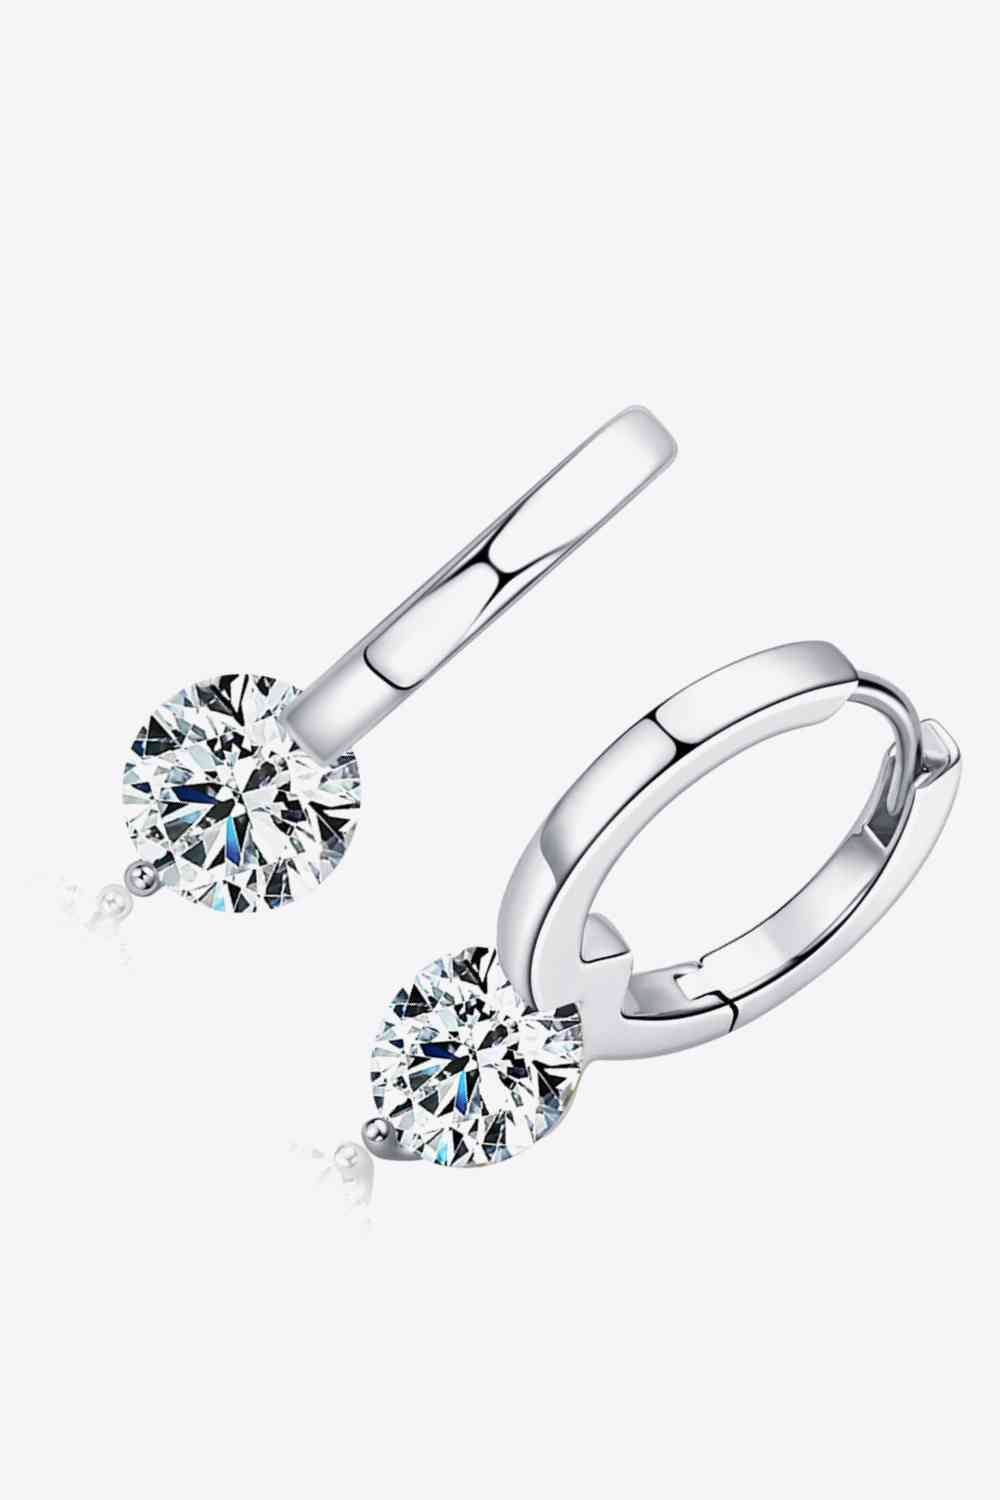 a pair of white gold diamond earrings